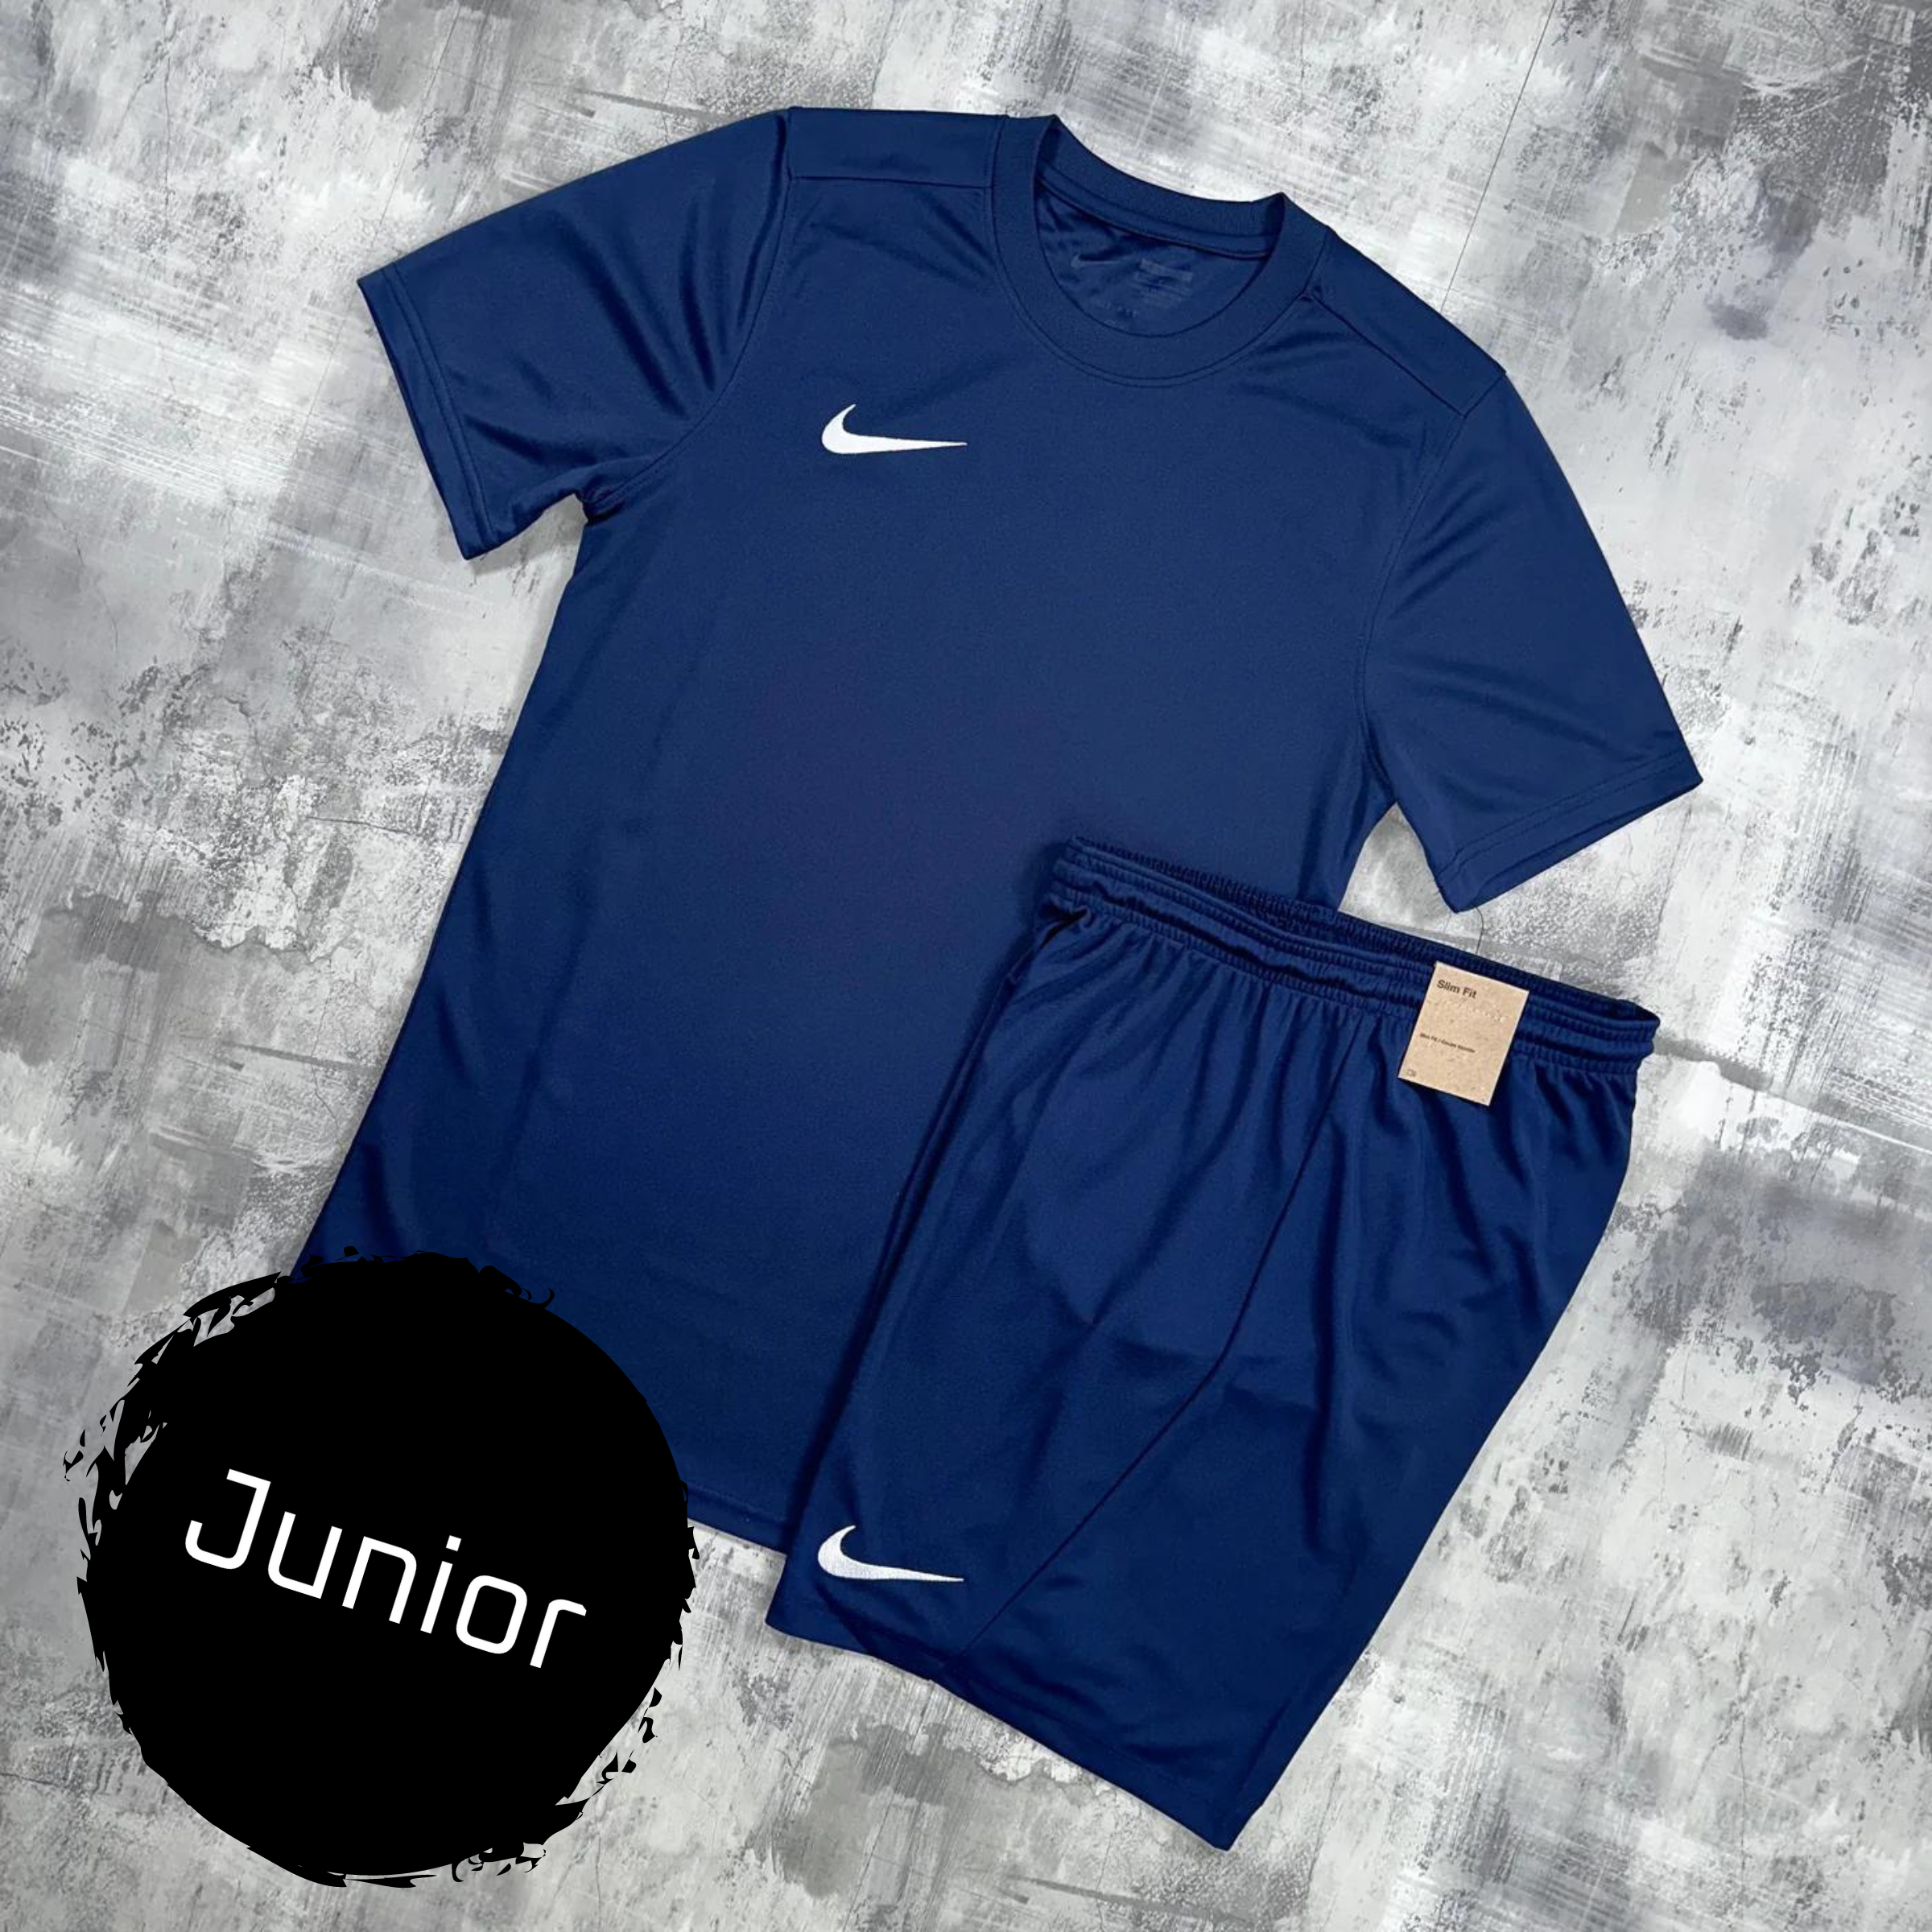 Nike Junior Dri-Fit set Navy - t-shirt & shorts